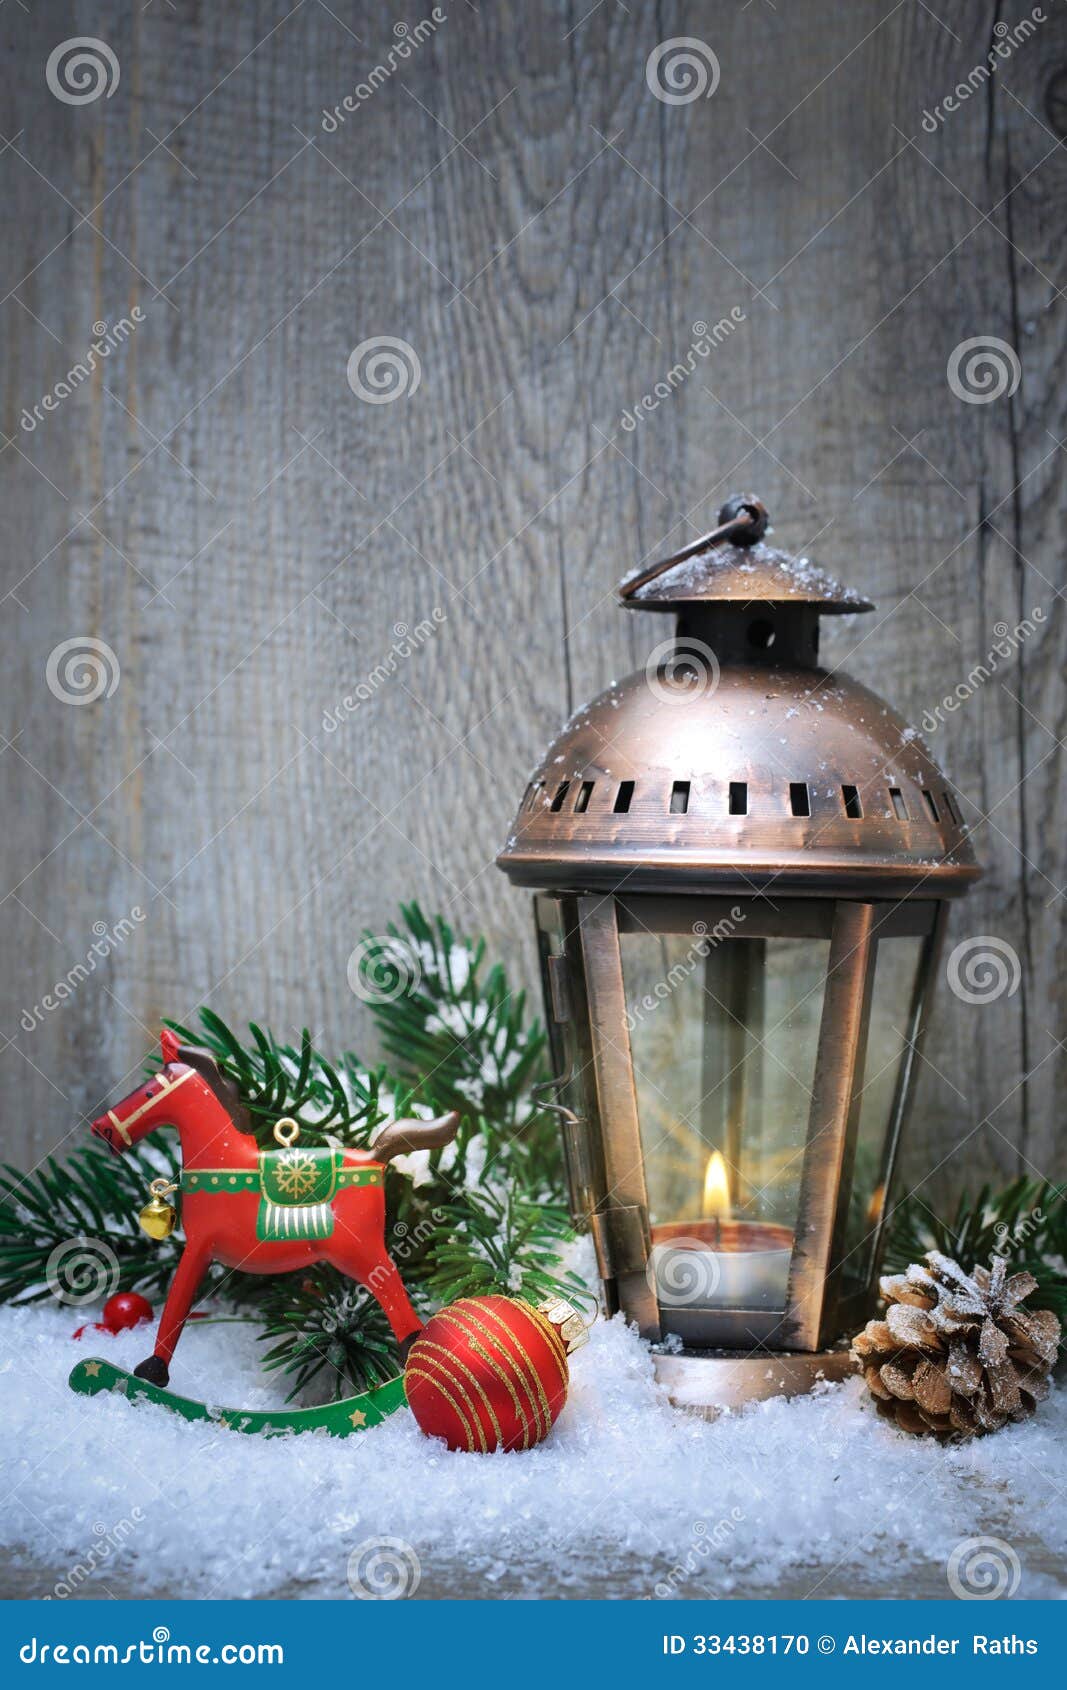 Christmas Lantern In The Snow Stock Photo - Image: 33438170